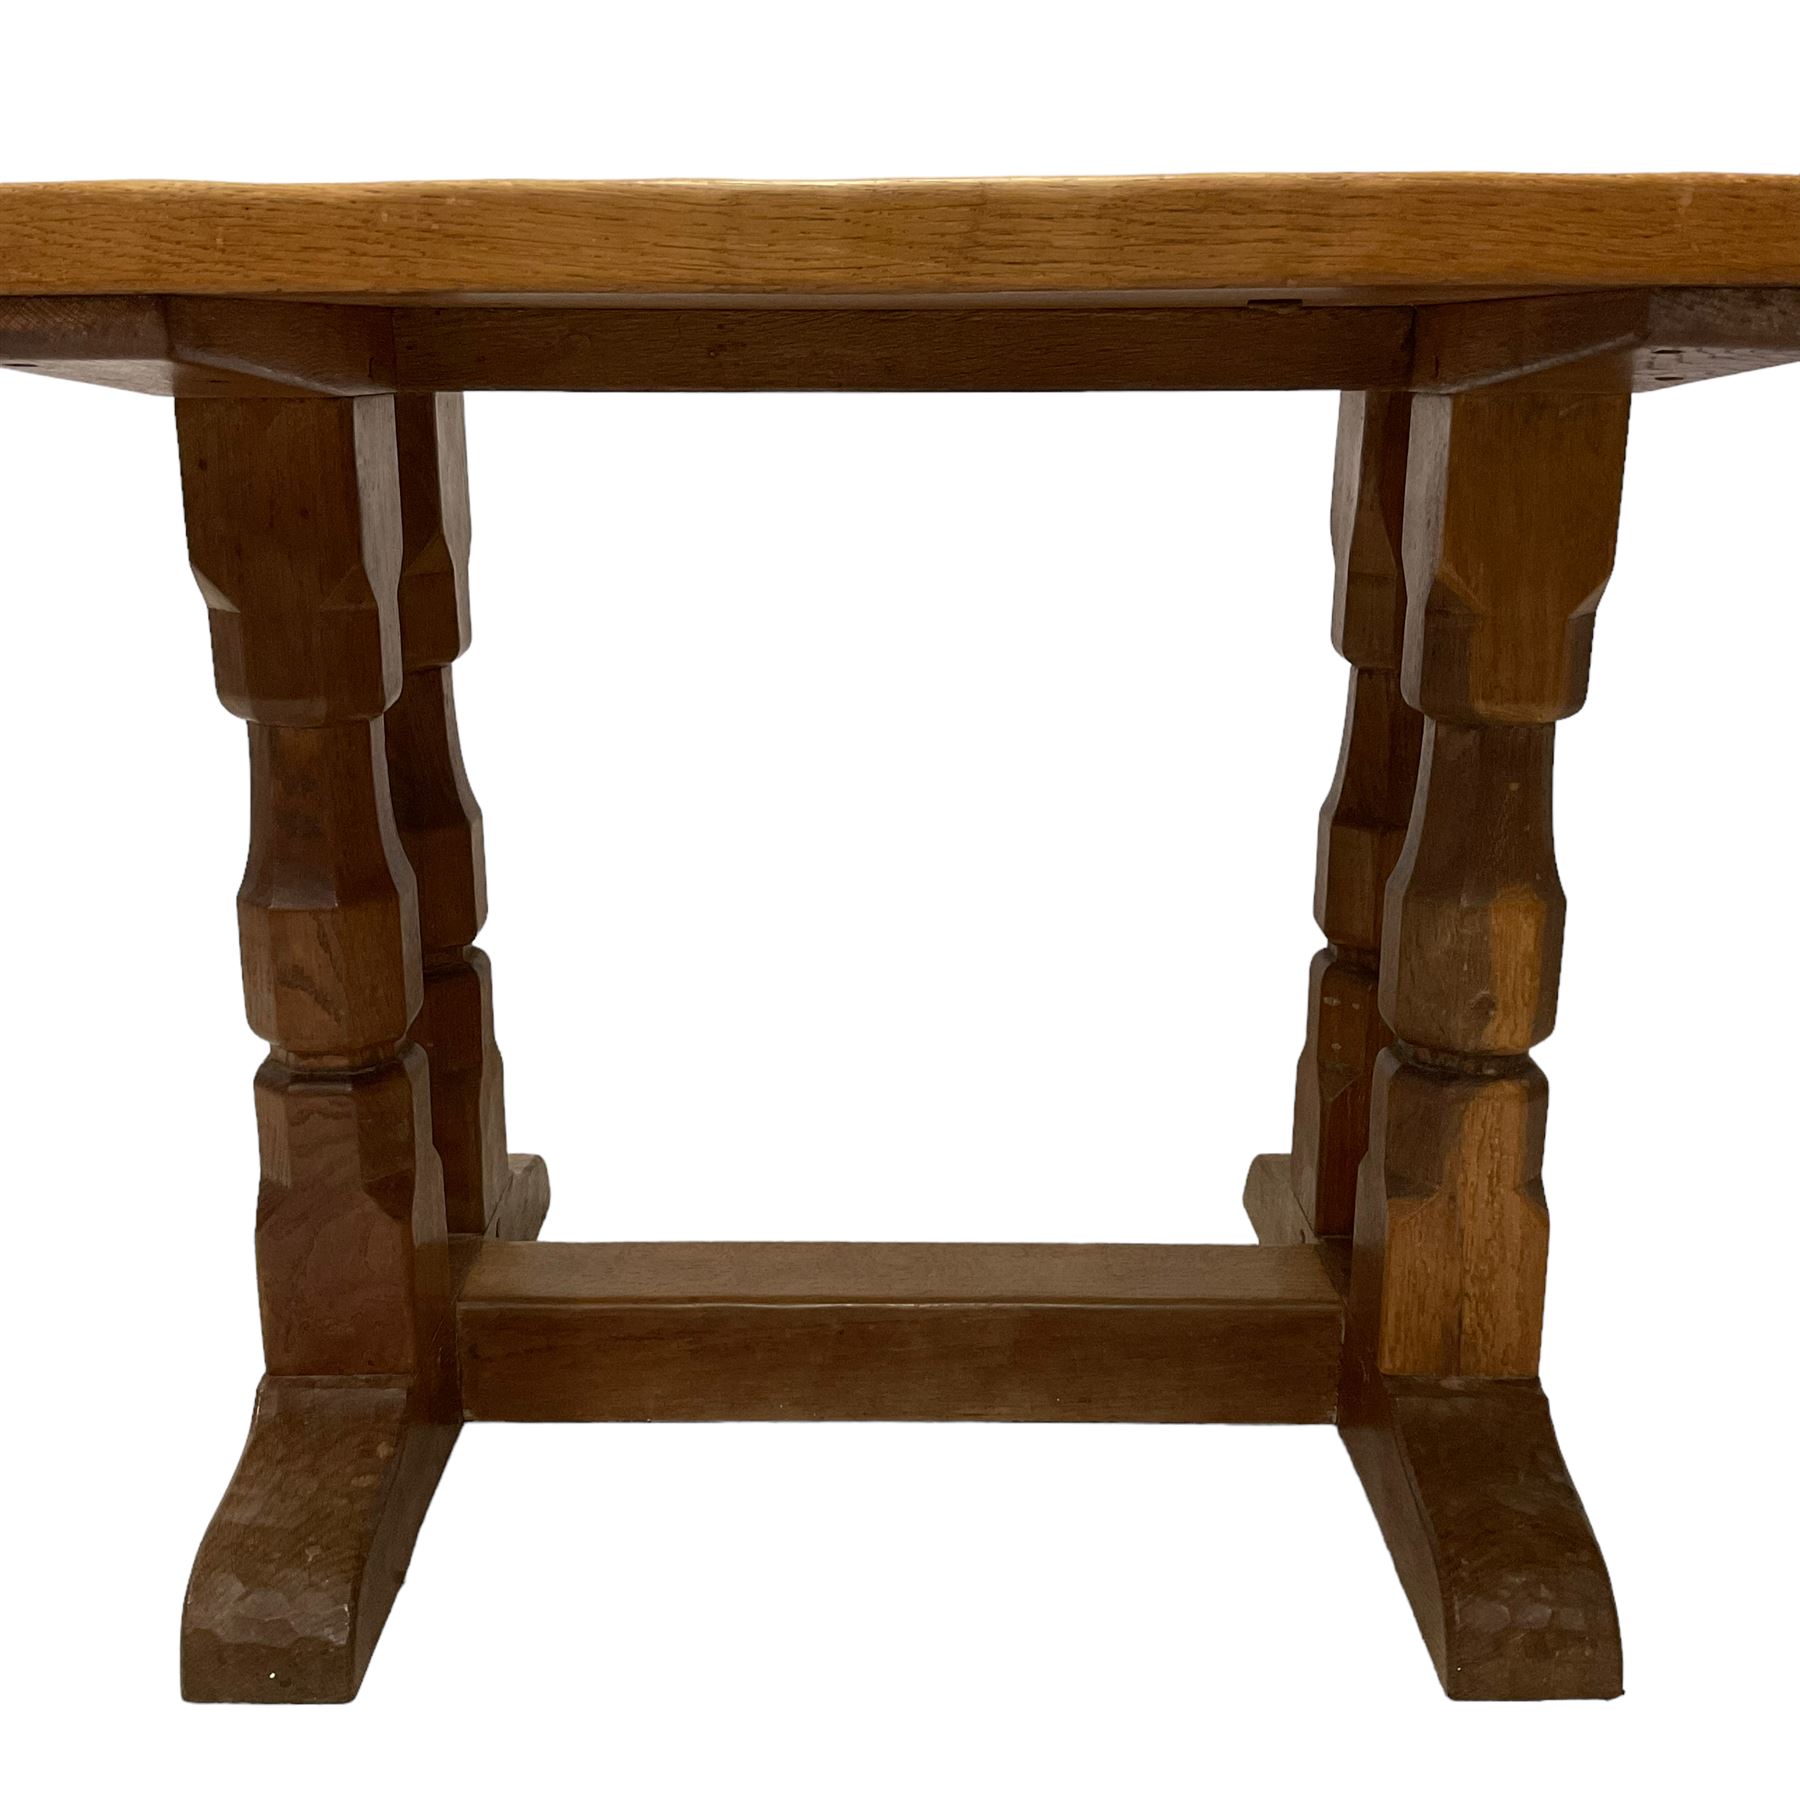 Yorkshire Oak - oak dining table - Image 8 of 10